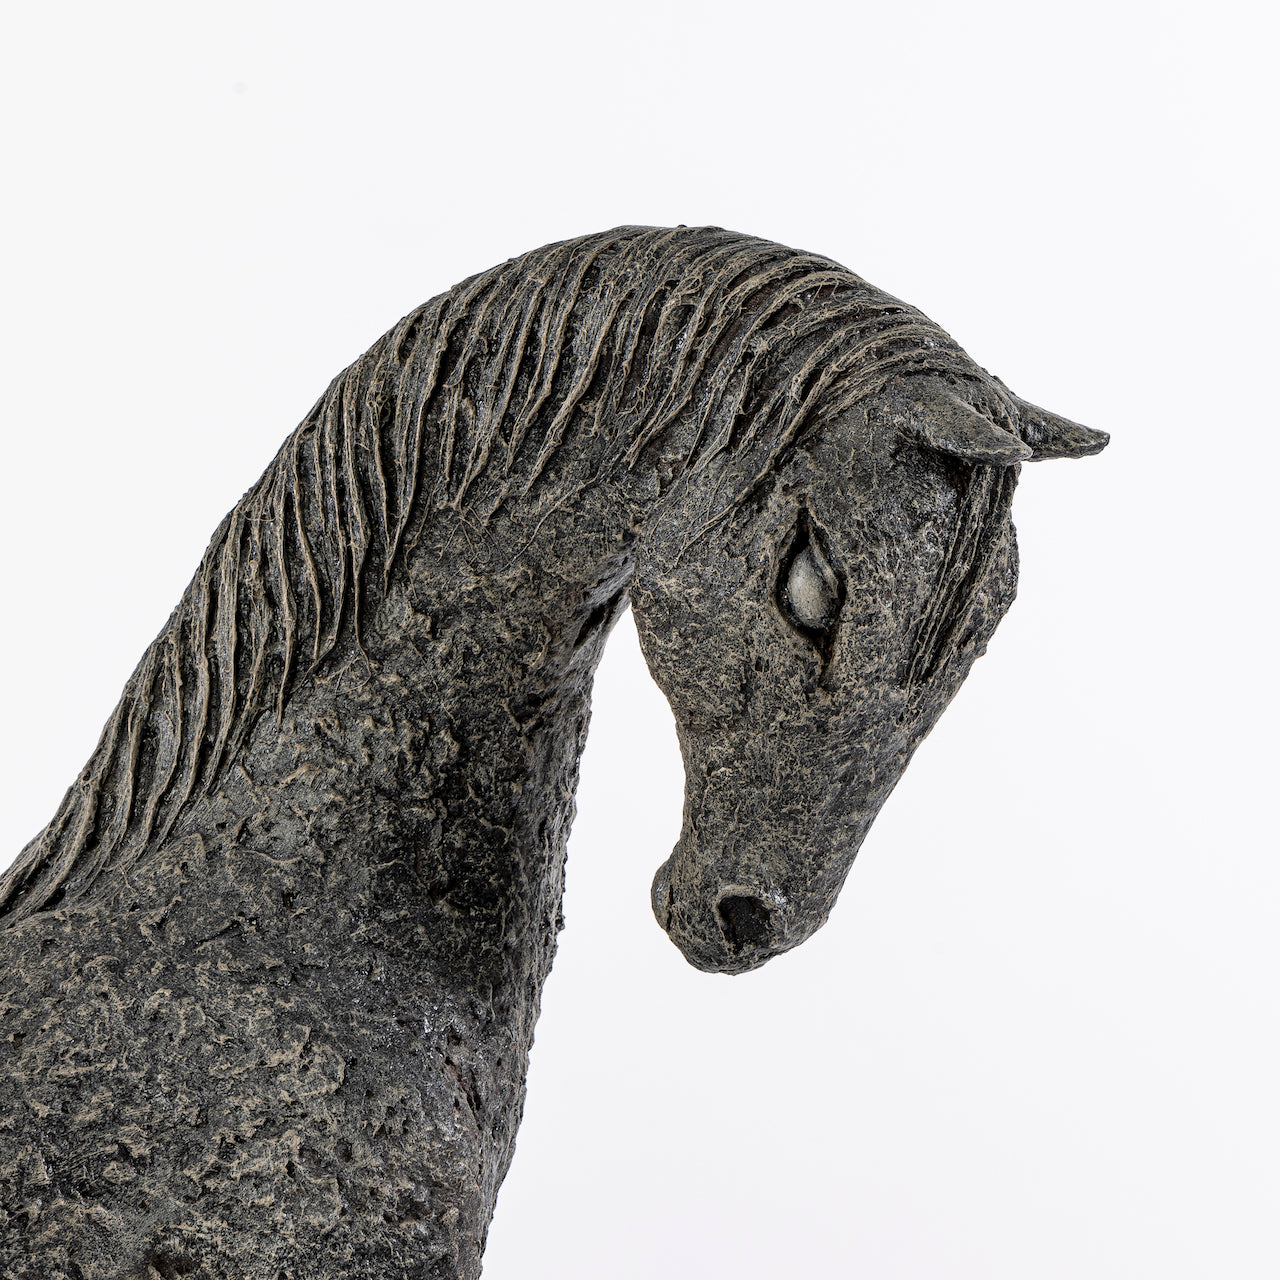 Luxurious Horse Sculpture By Toni Bond